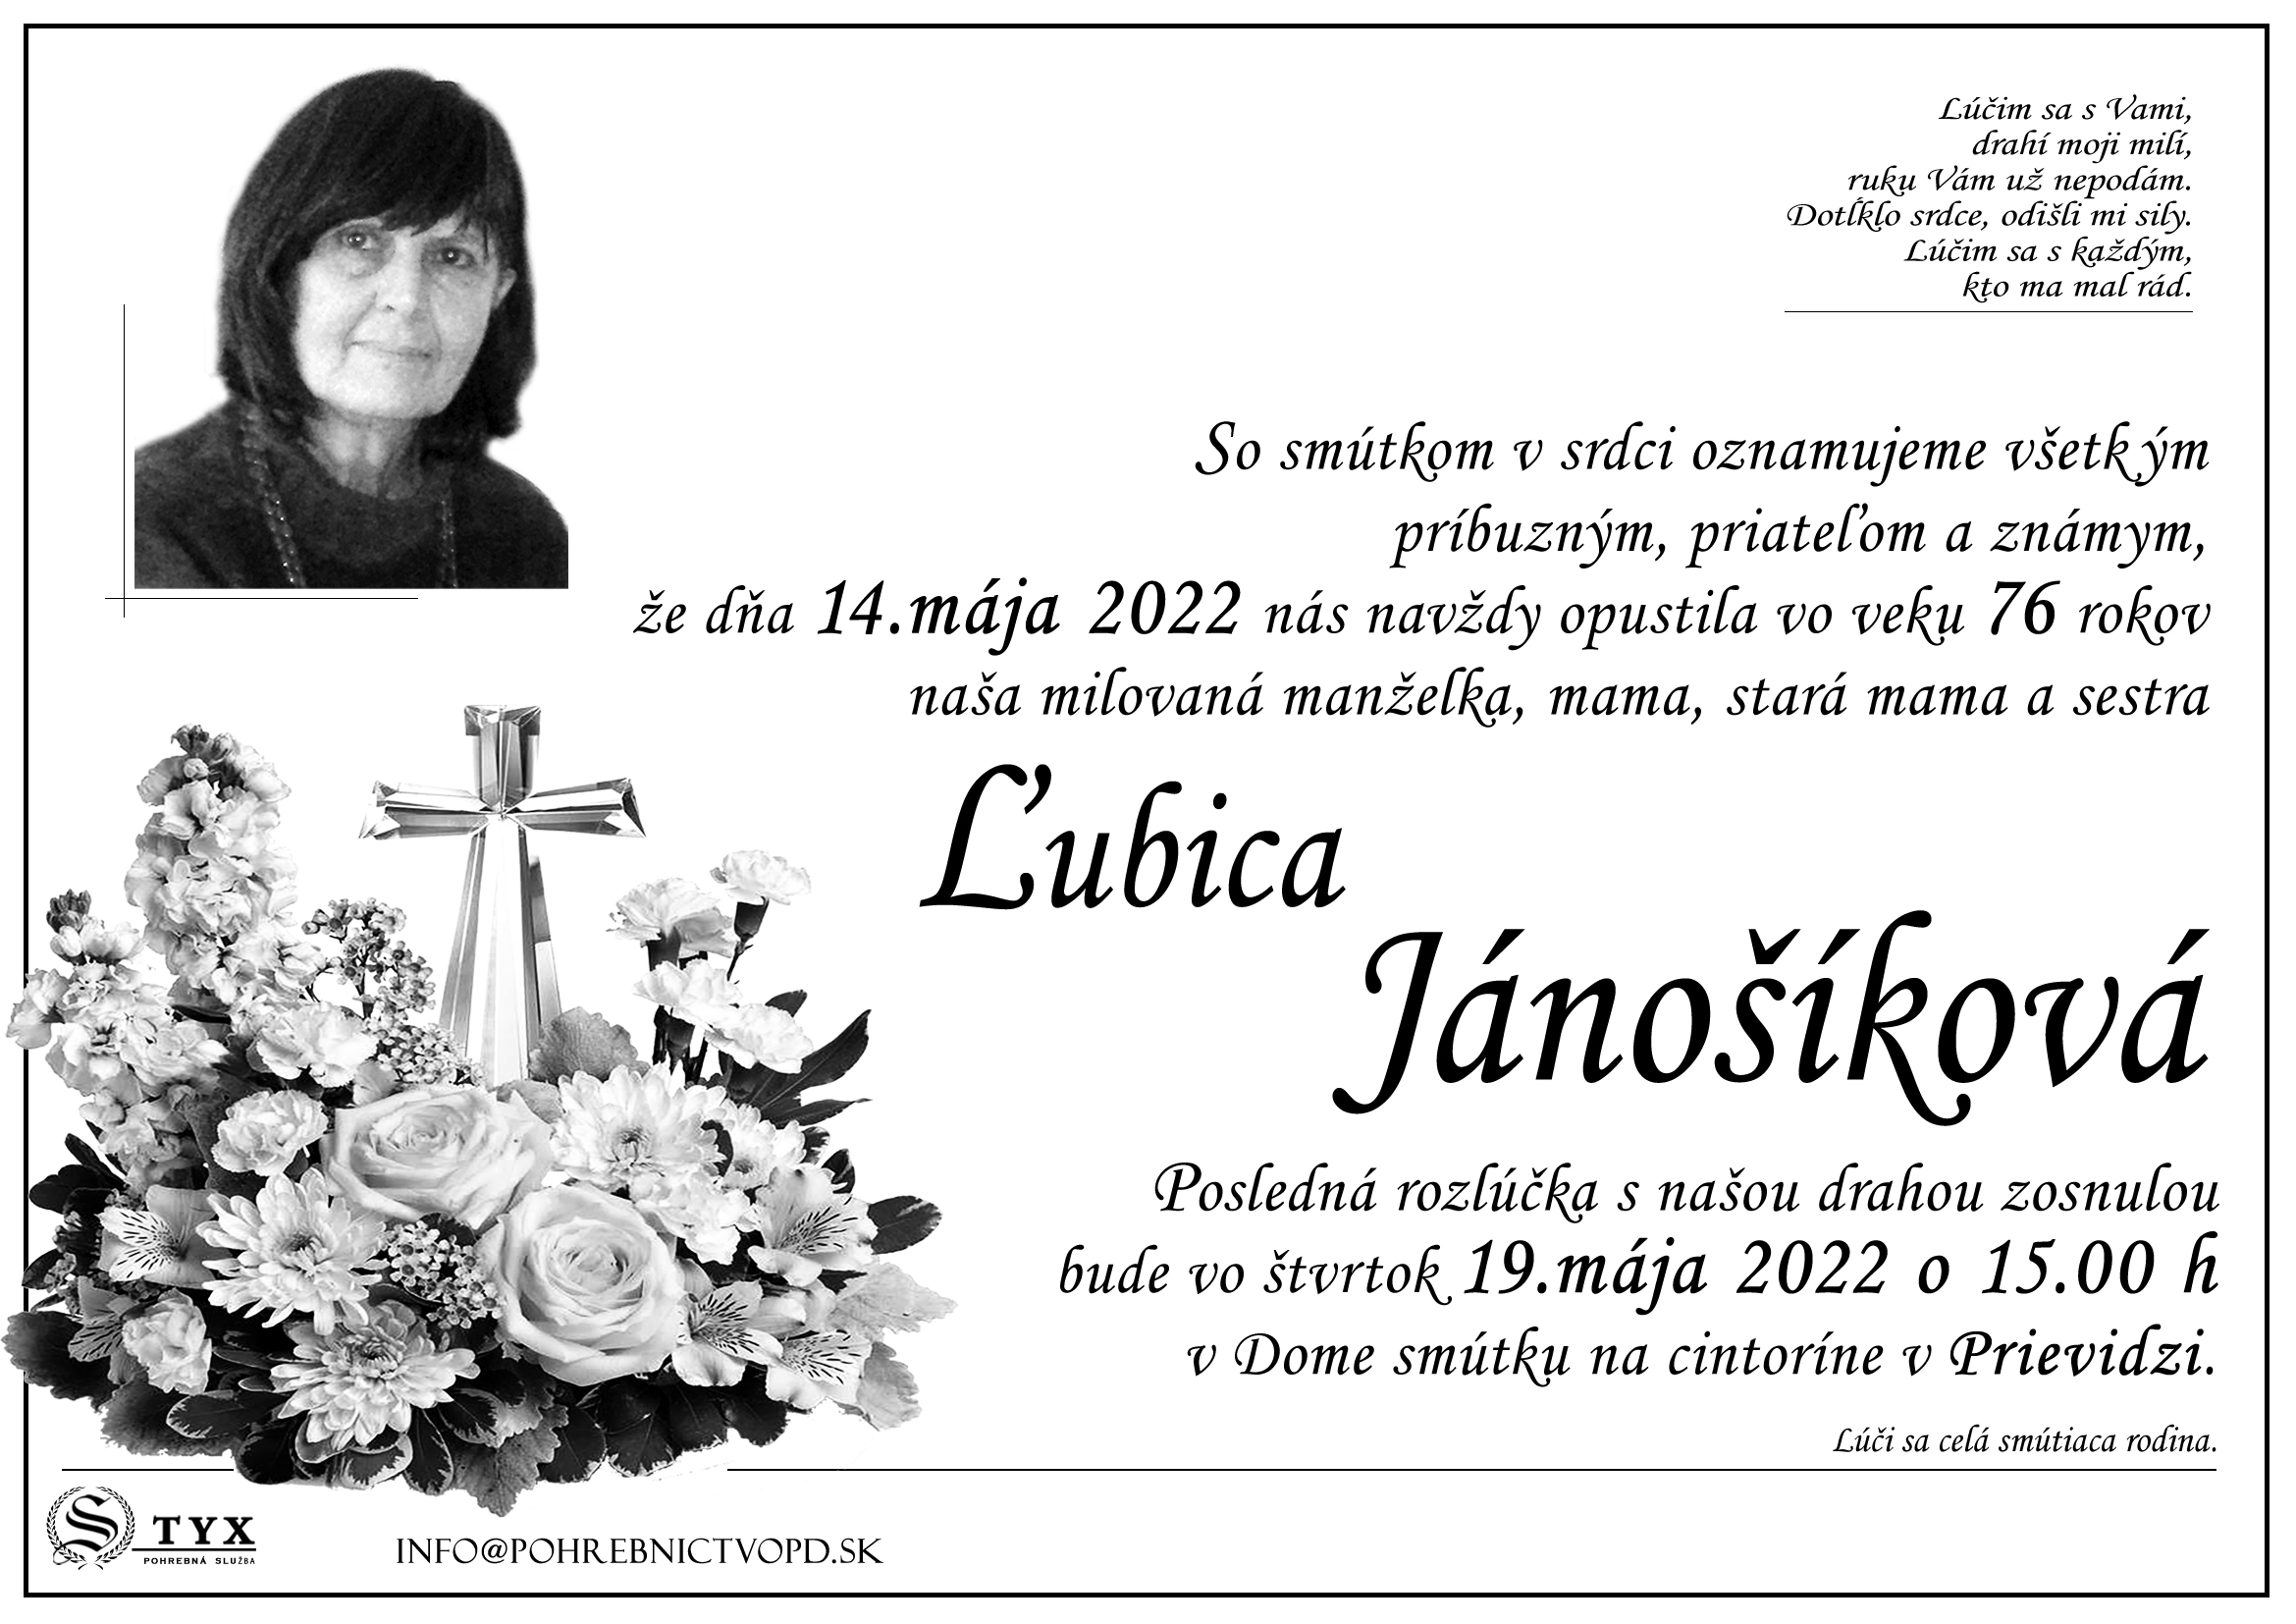 Lubica Janosikova - parte